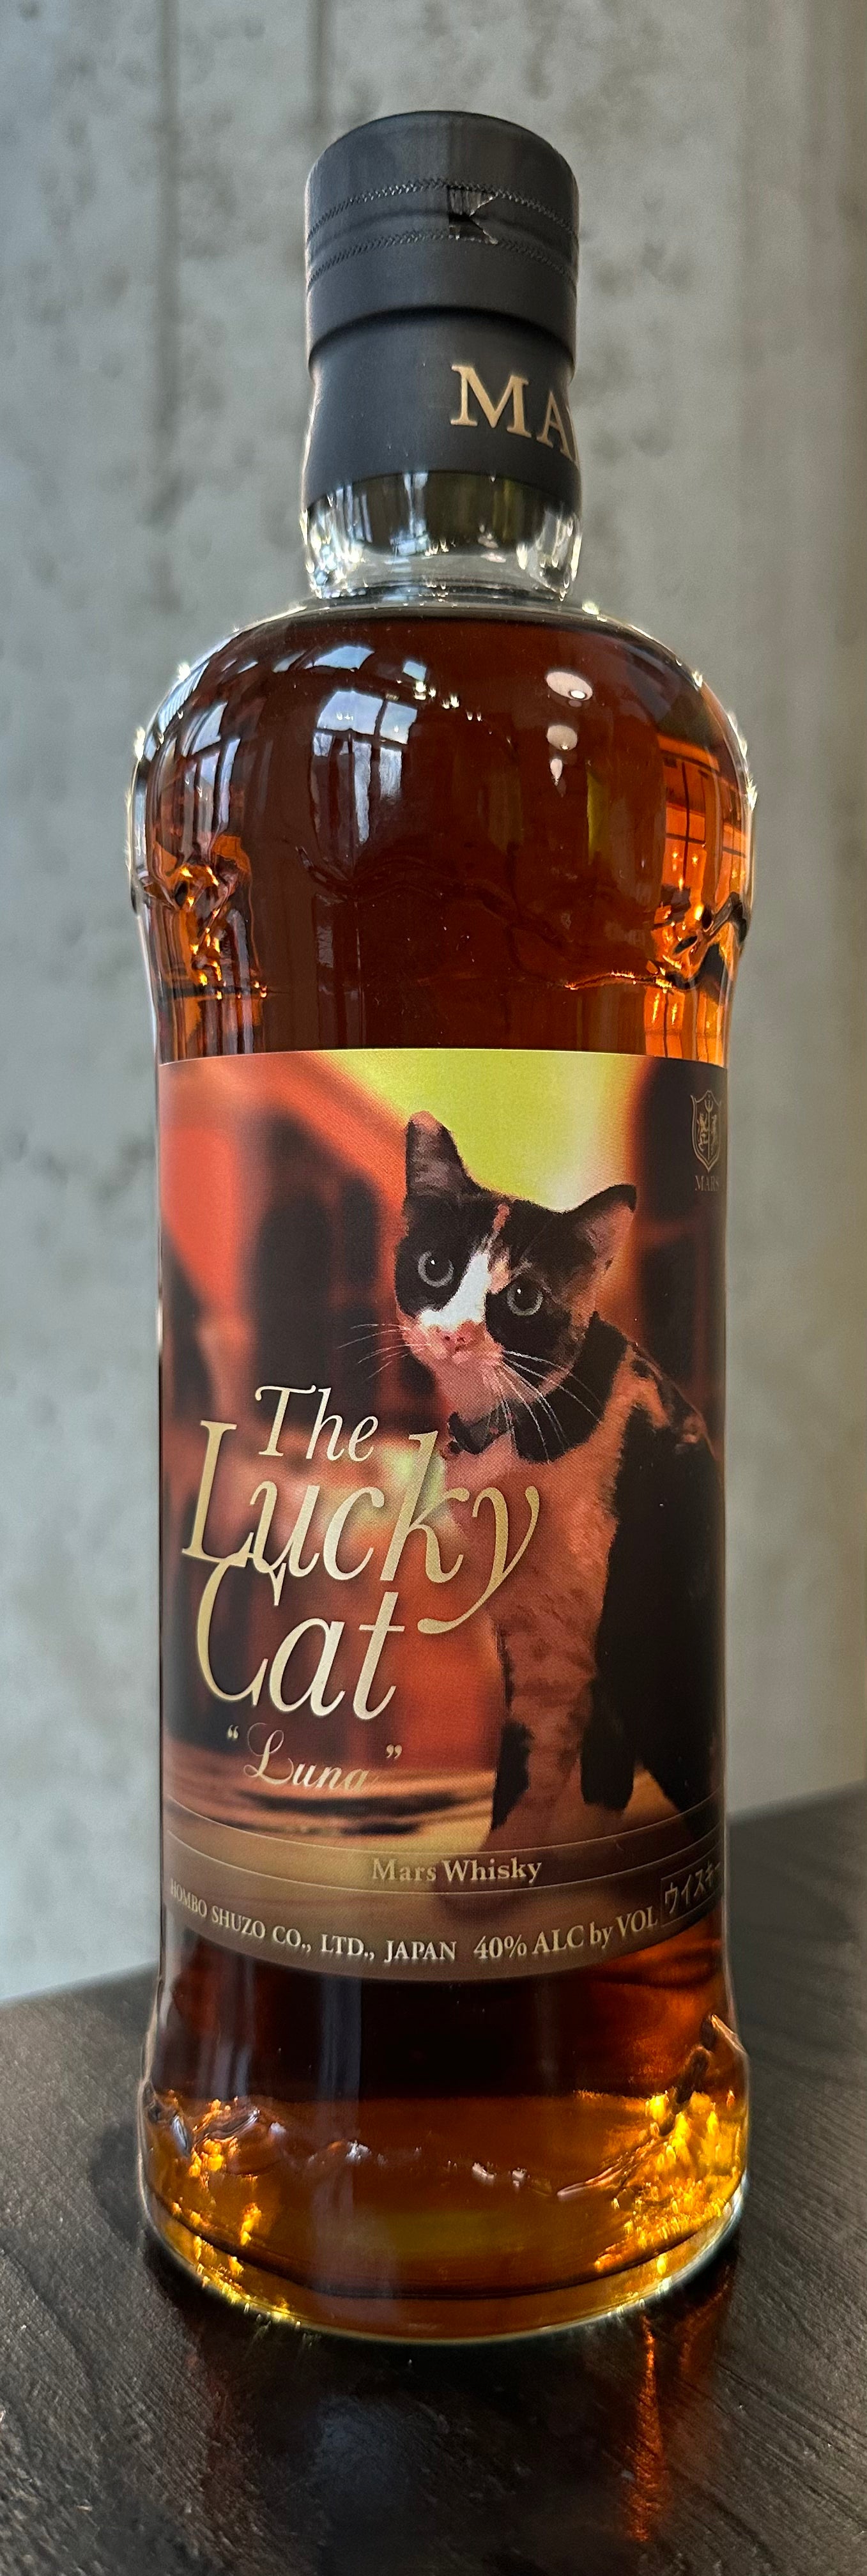 Mars Shinshu Whisky "The Lucky Cat–Luna"